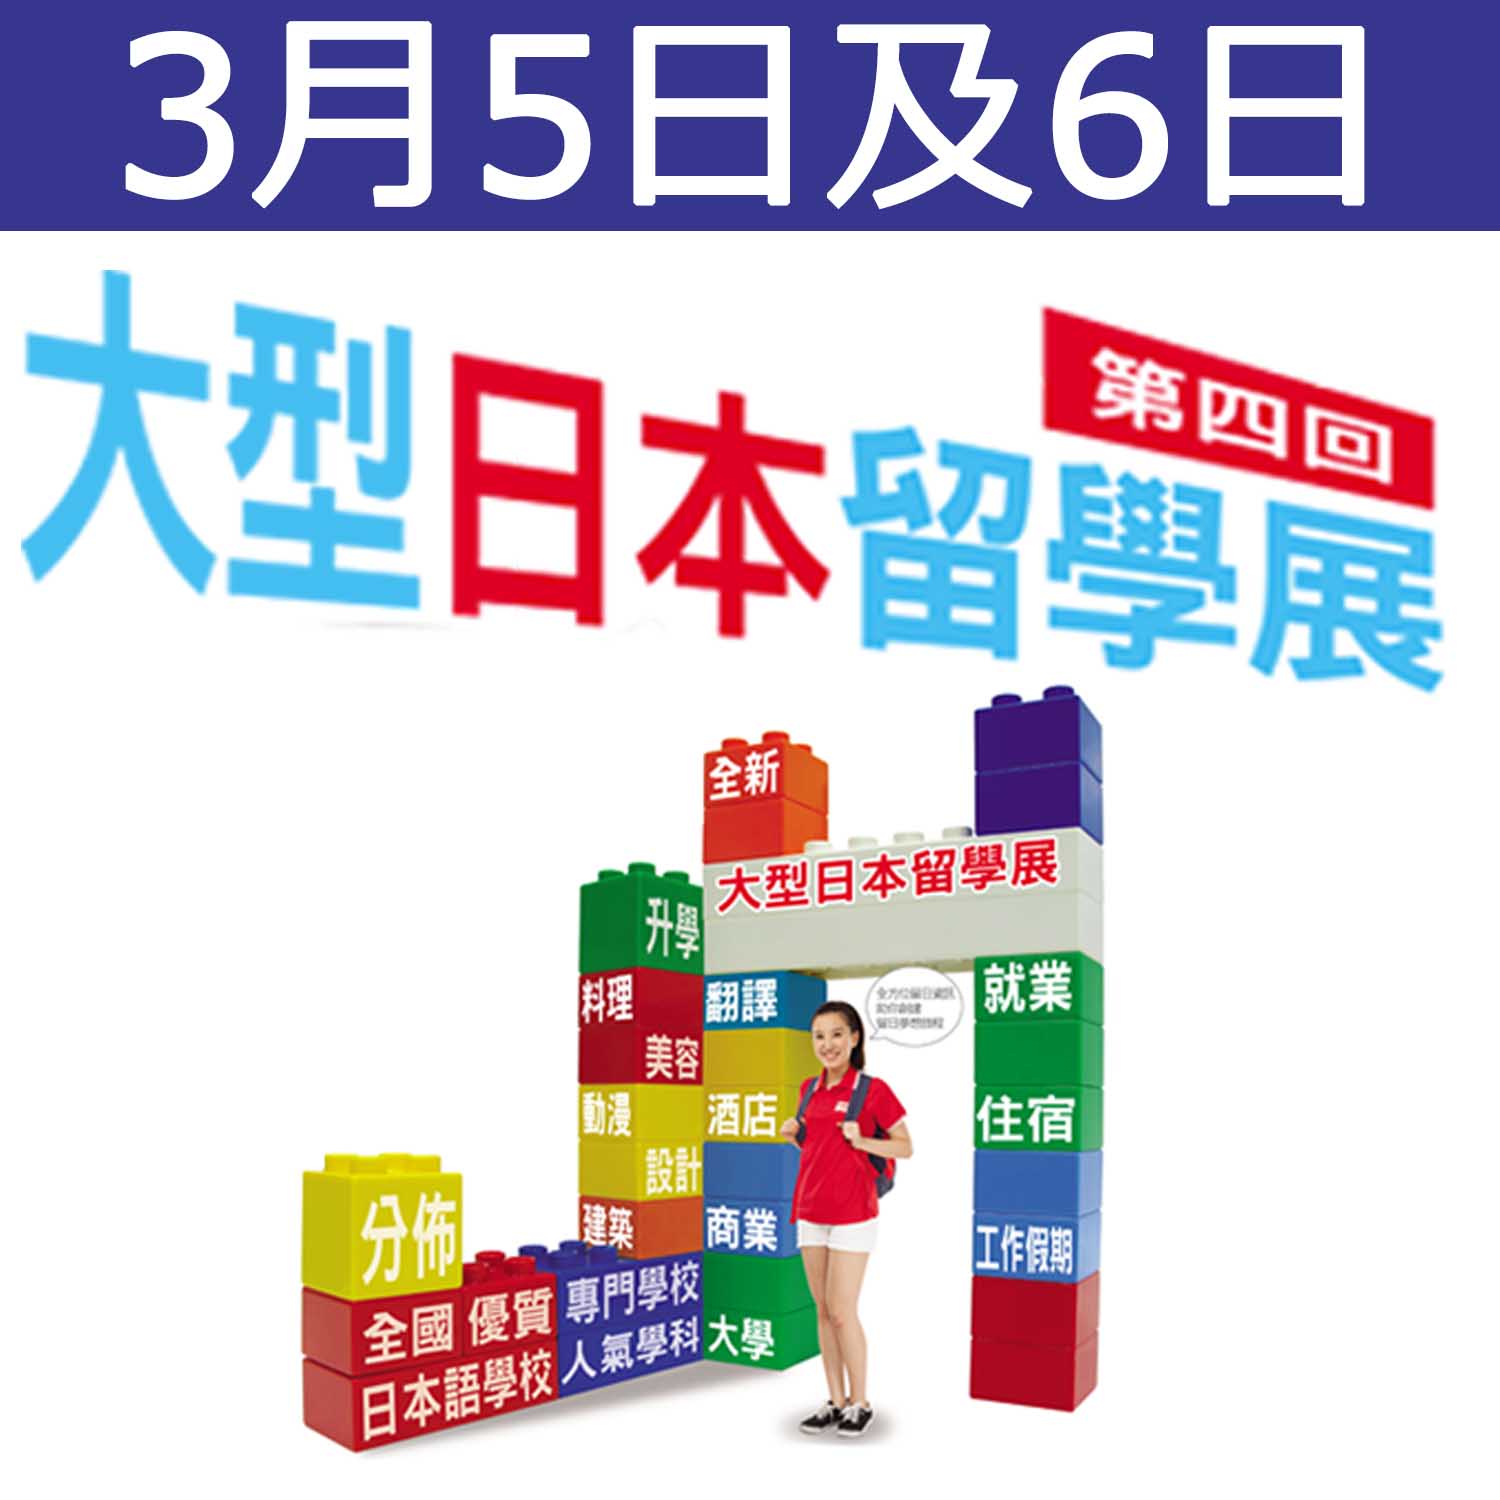 305_6 logo